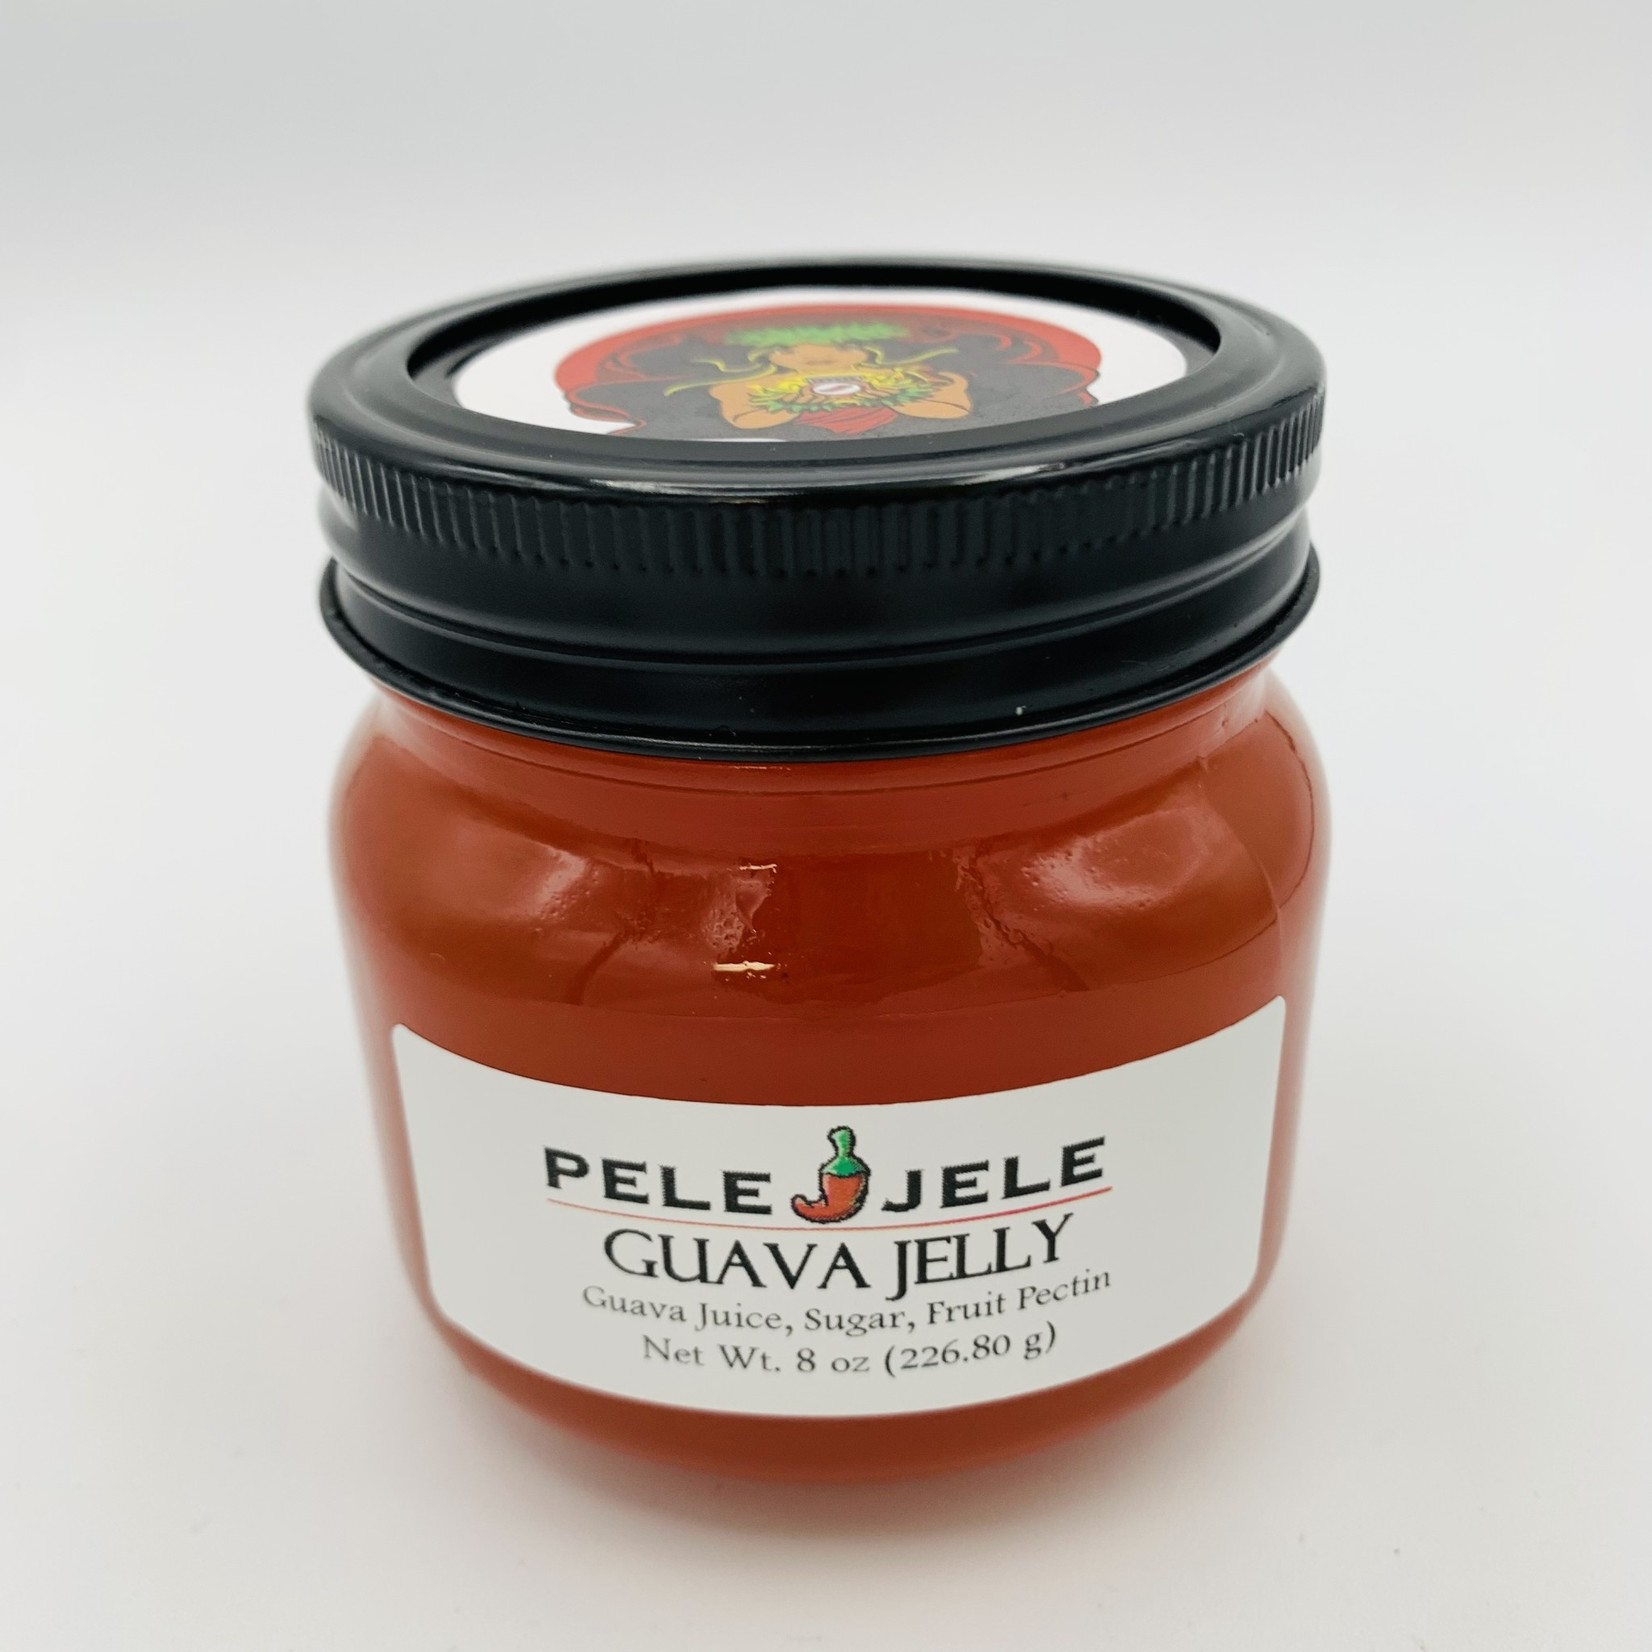 Pele Jele LLC Guava Jelly